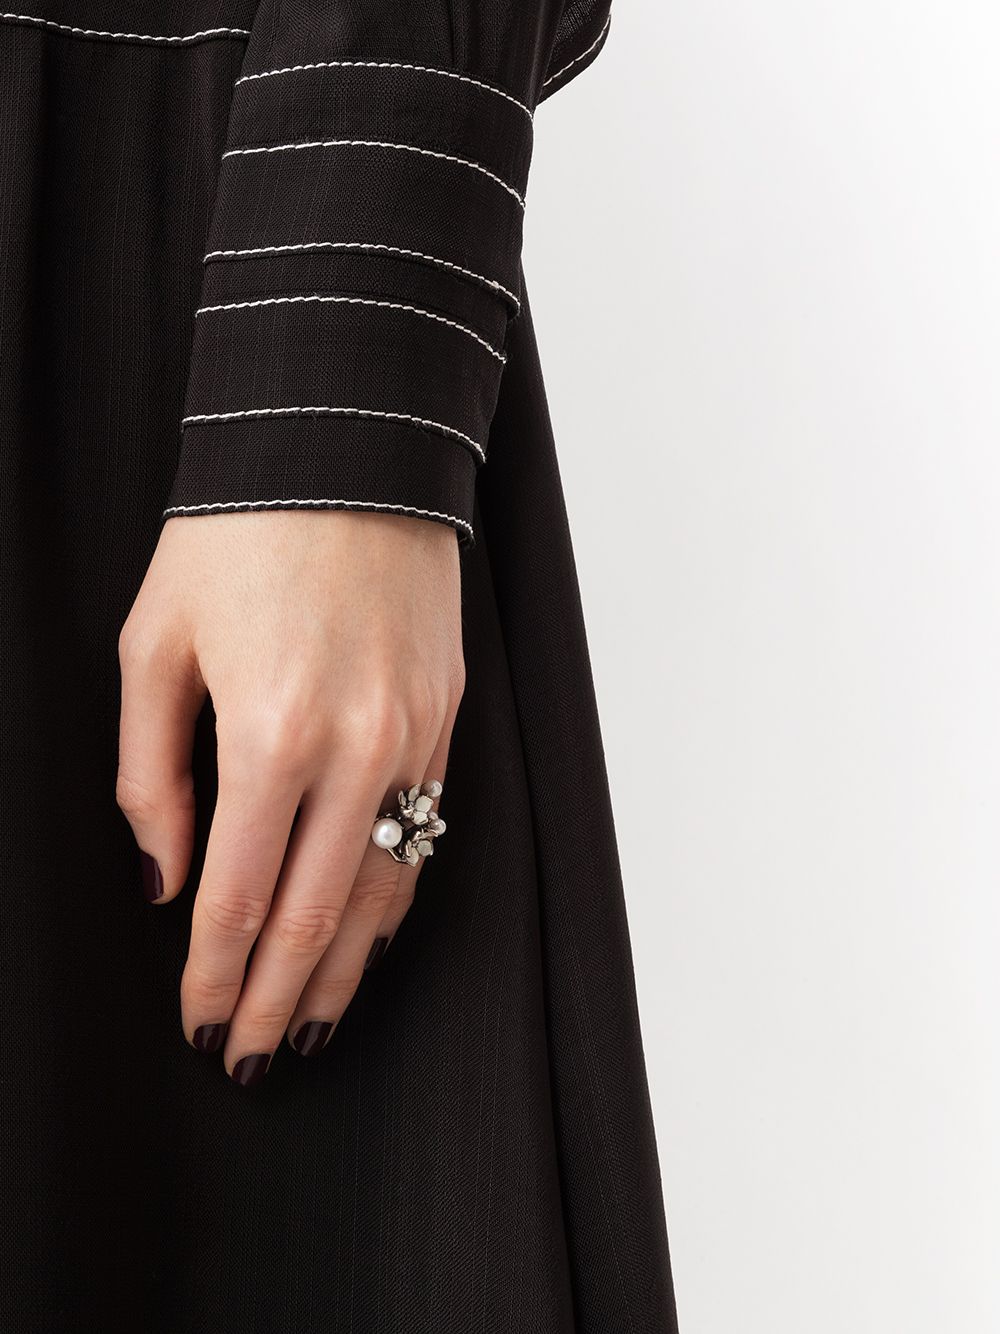 CHERRY BLOSSOM 钻石与珍珠花卉造型戒指